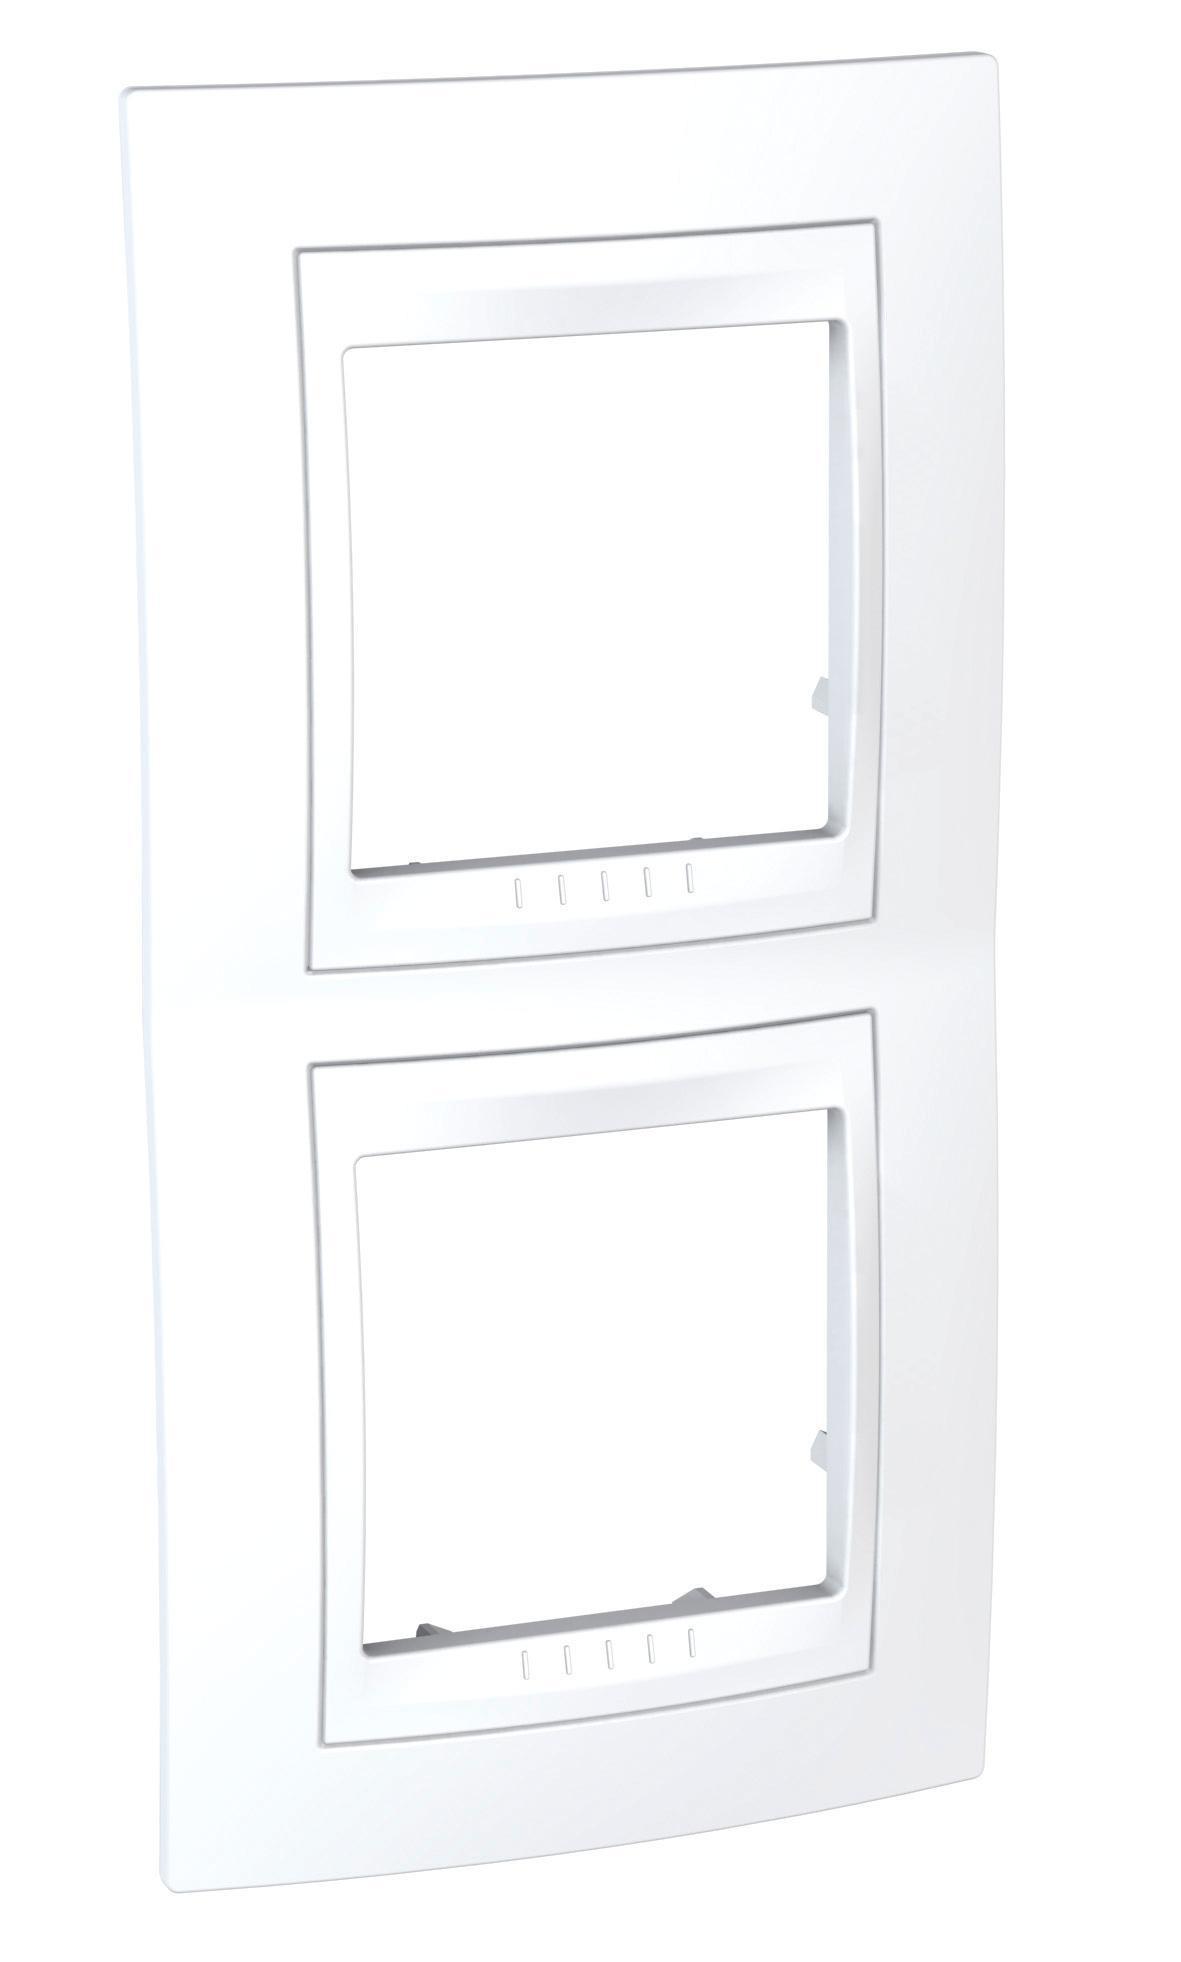 Рамка двойная вертикальная, Белый, серия Unica, Schneider Electric артикул MGU6.004V.18